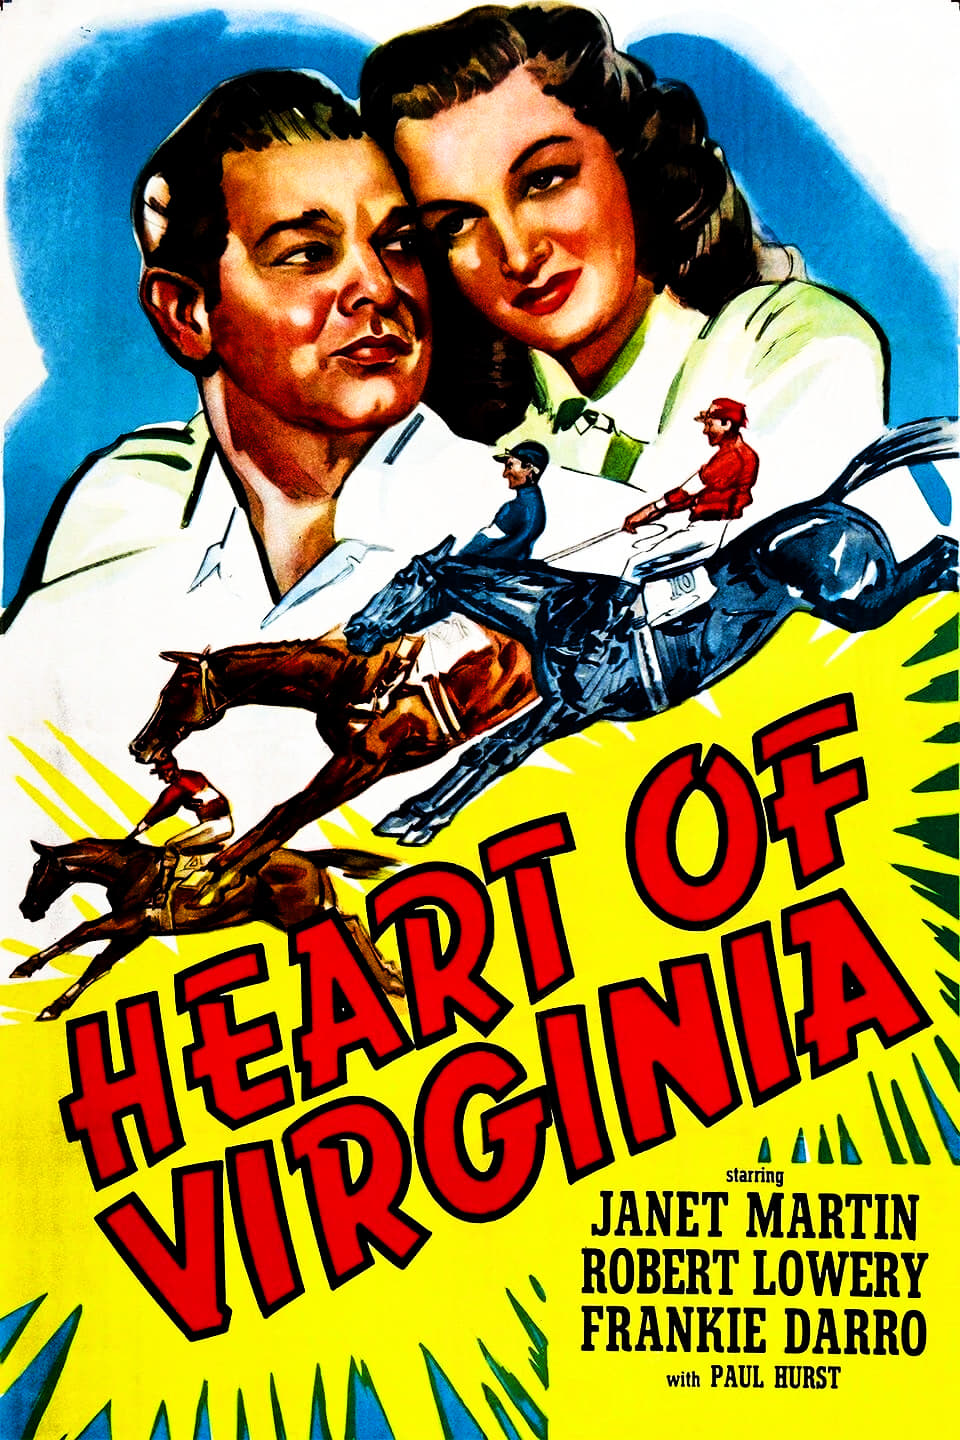 Heart of Virginia (1948)